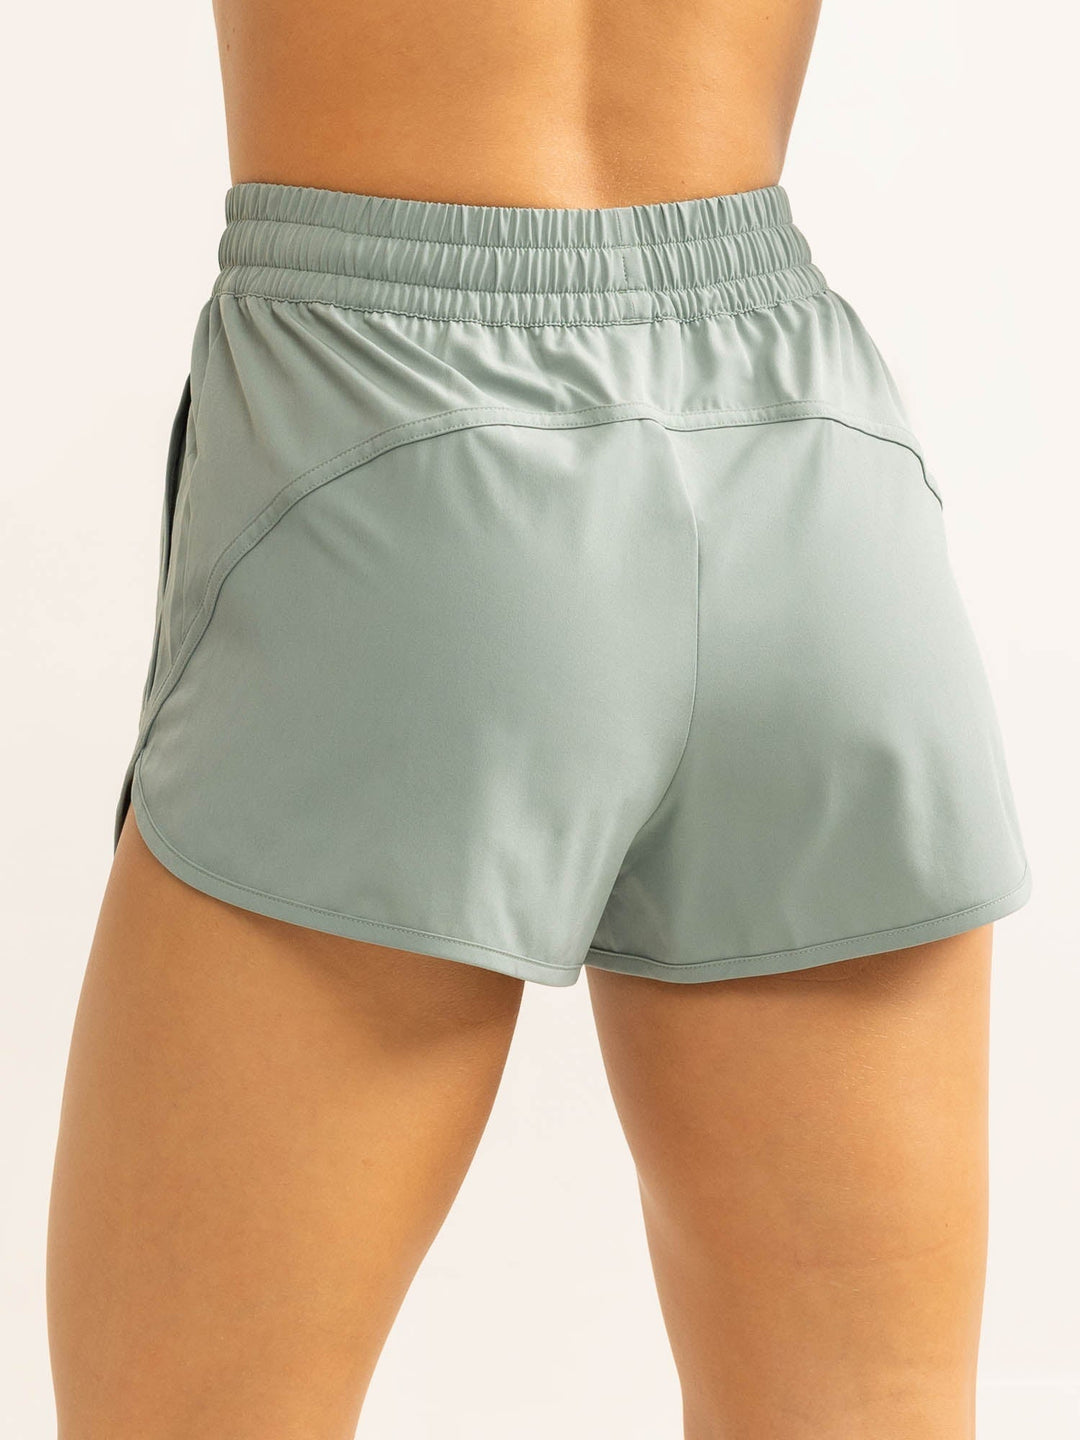 Persist Training Shorts - Dusty Green Clothing Ryderwear 